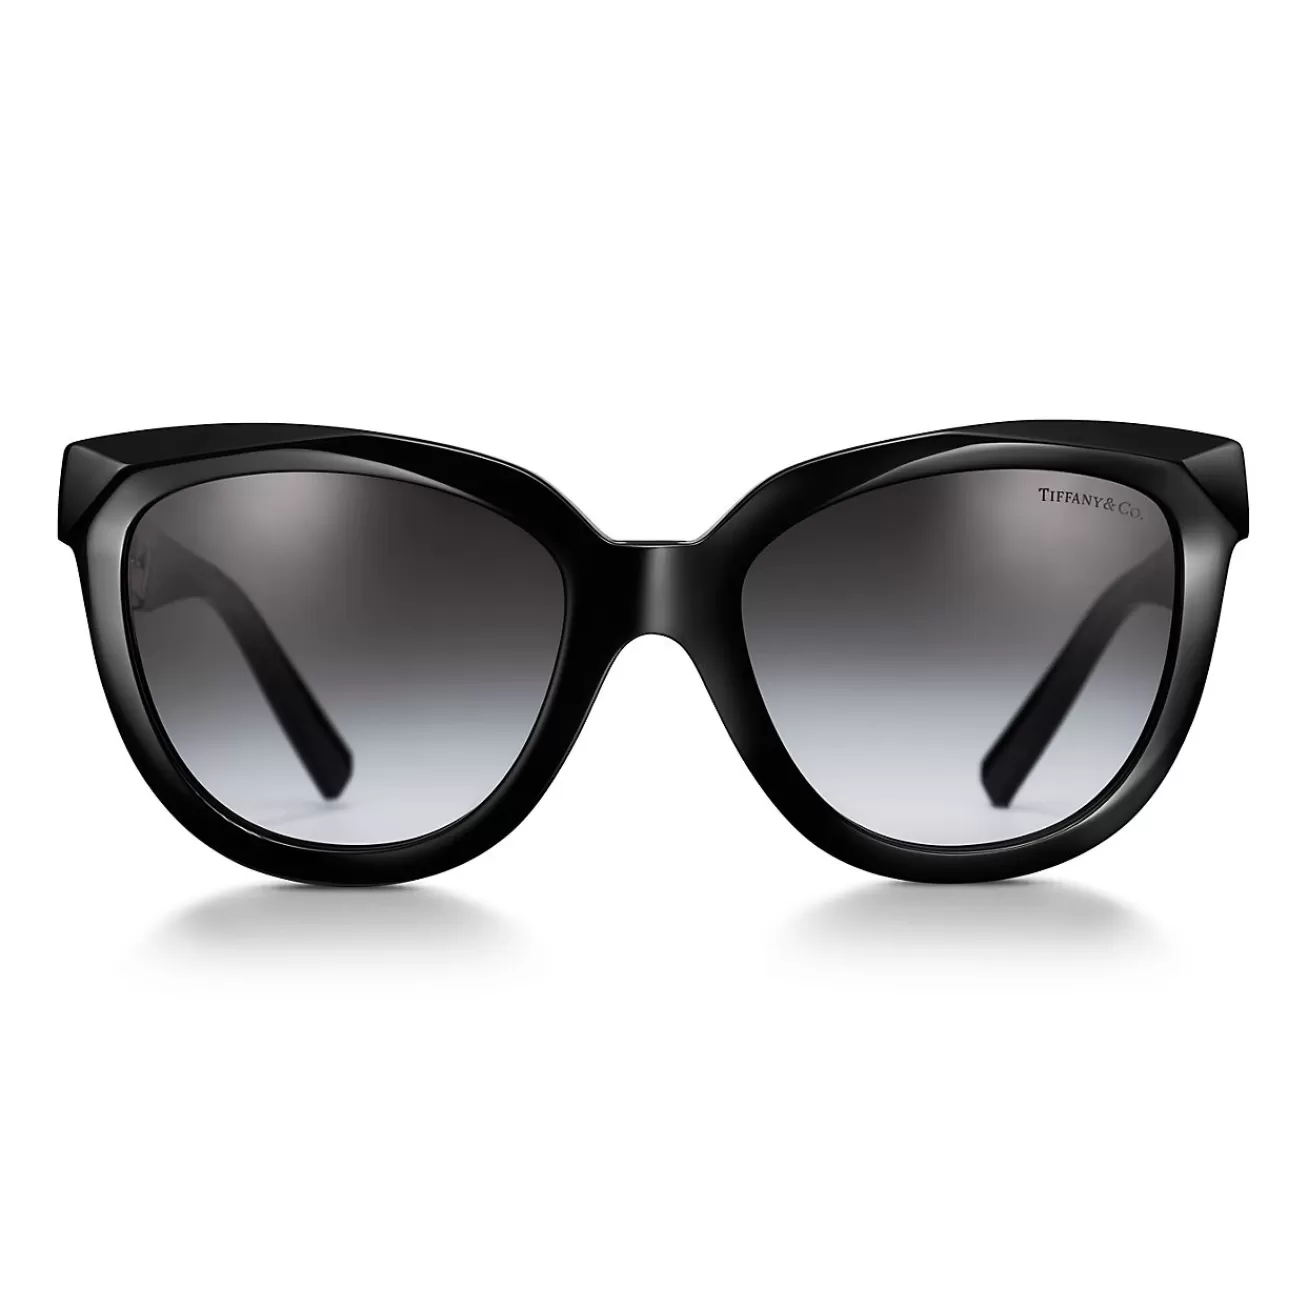 Tiffany & Co. Tiffany T True Sunglasses in Black Acetate with Gray Lenses | ^Women Tiffany T | Sunglasses